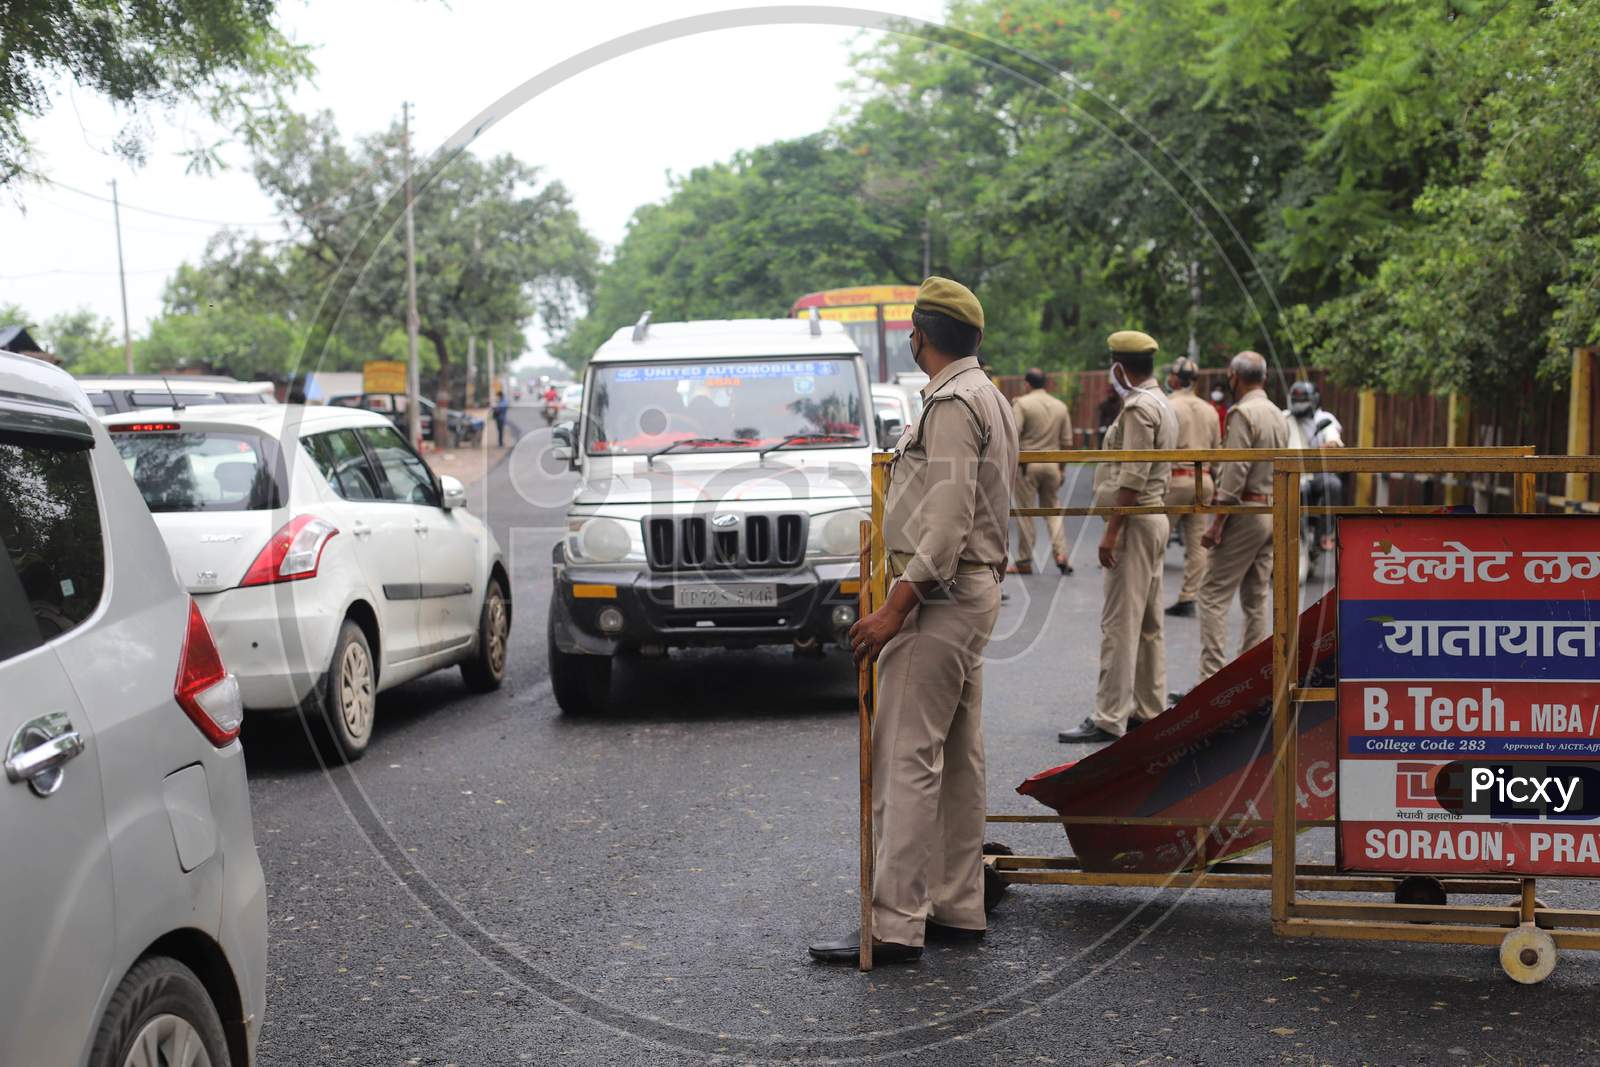 Police officials inspect vehicles during the lockdown in Prayagraj, Uttar Pradesh on July 12, 2020